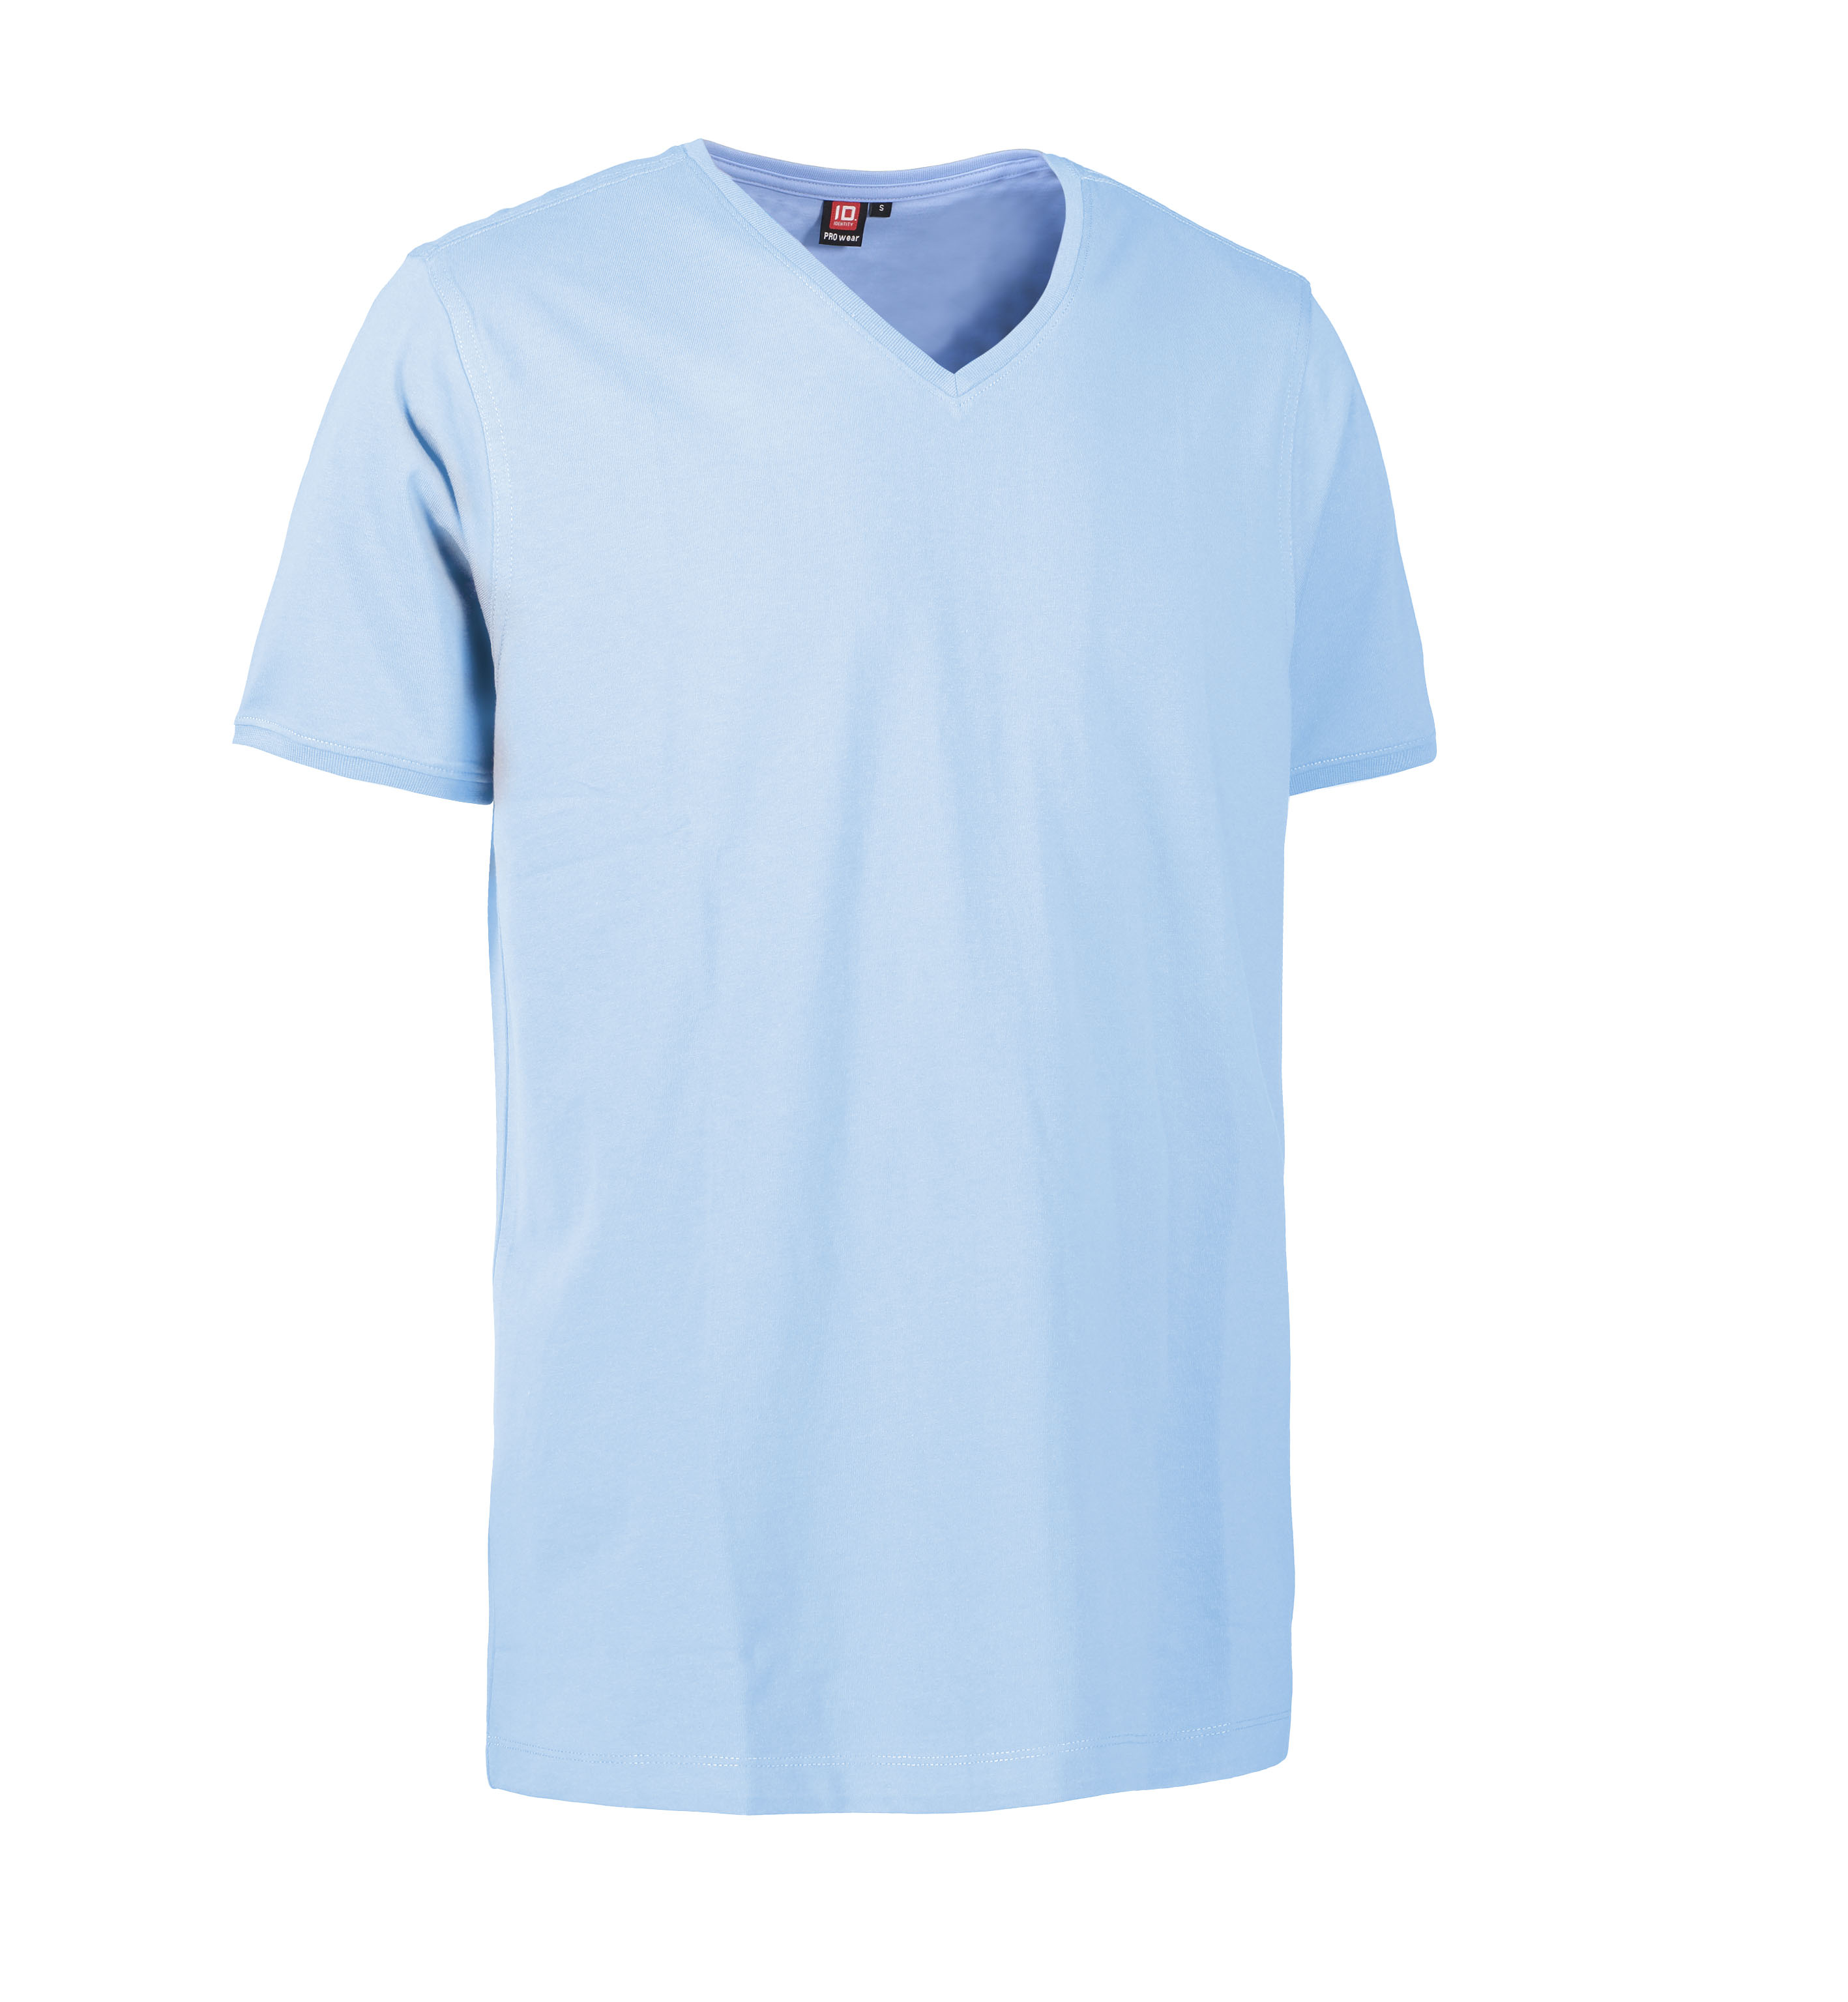 | | PRO | V-Ausschnitt Arbeitsbekleidung Sylke Besticken Wear T-Shirts by CARE | Oberbekleidung T-Shirt Gauder